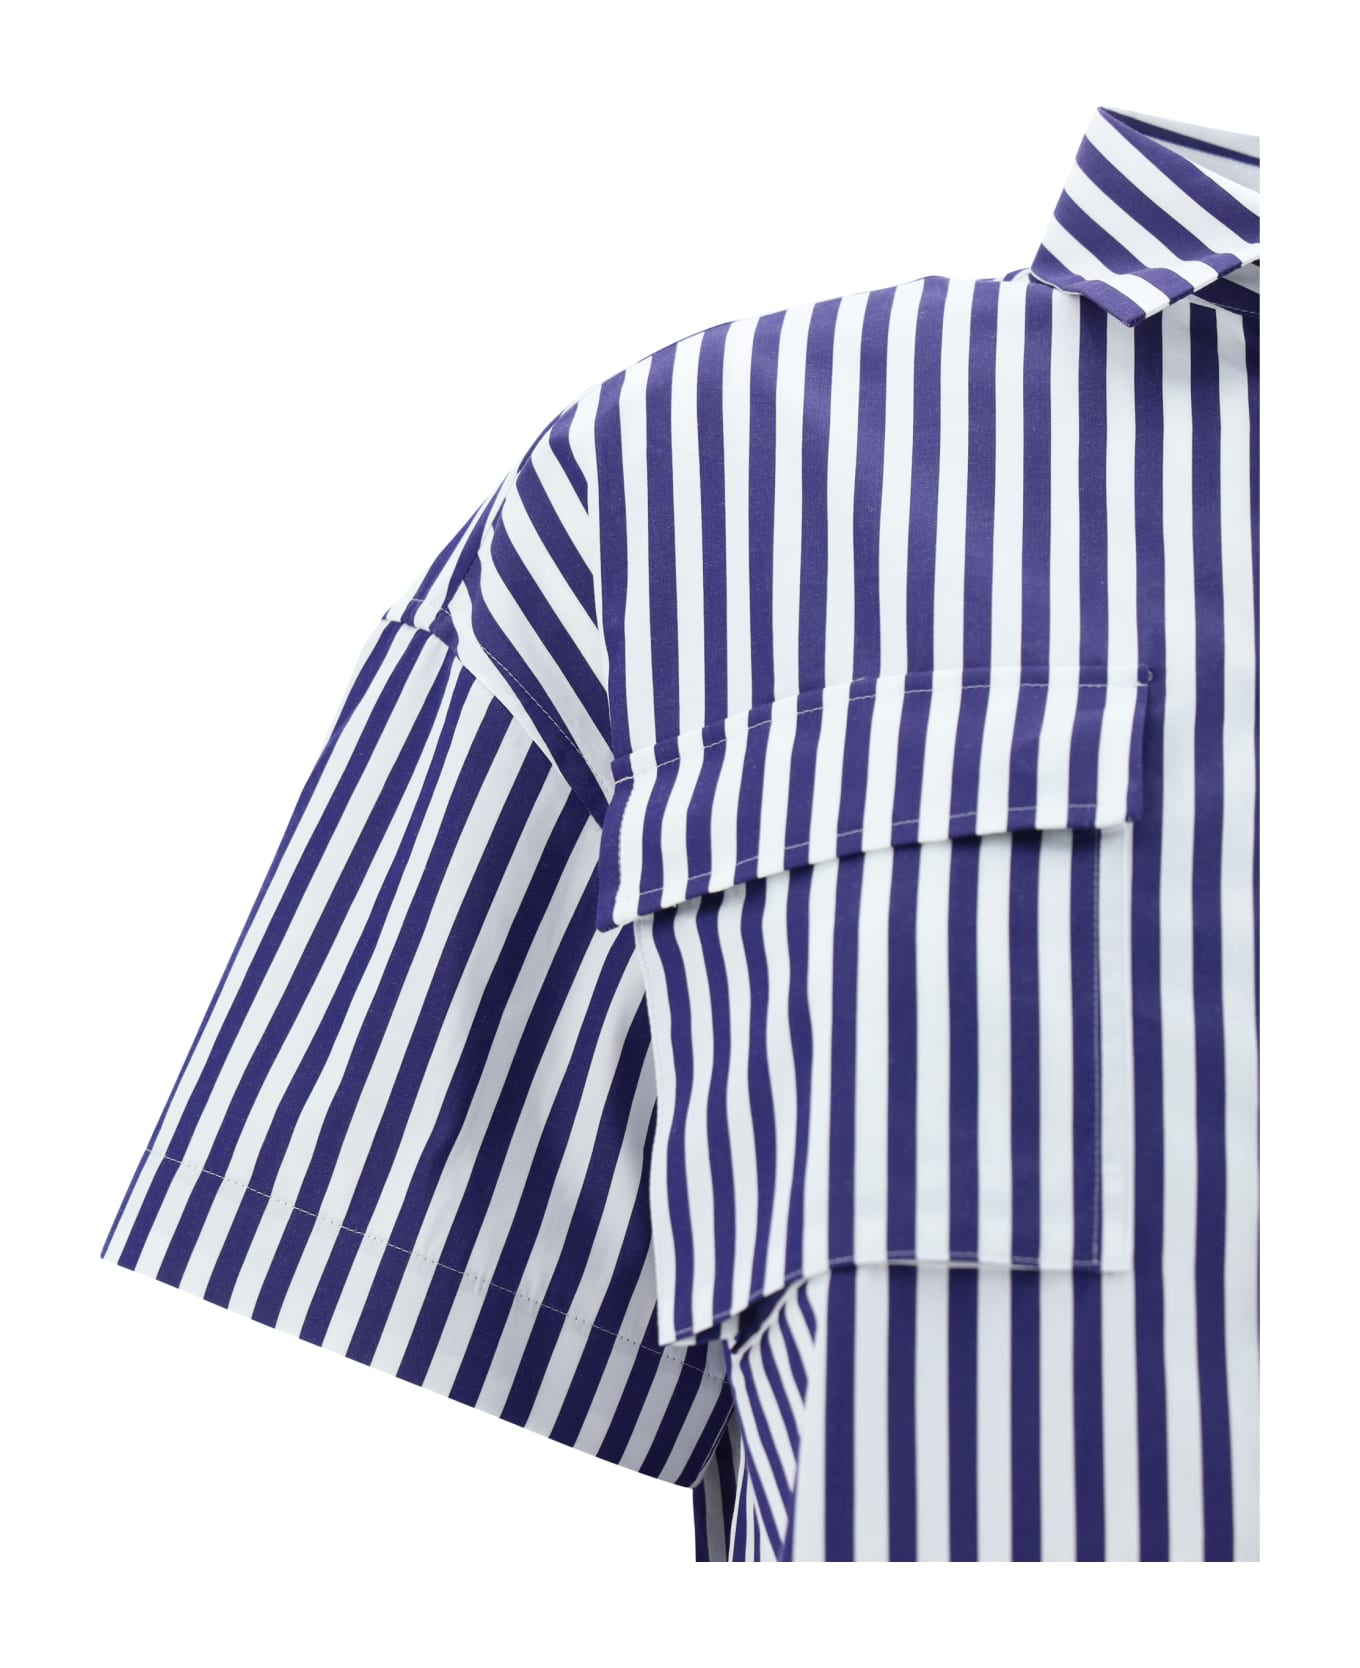 Sacai Shirt - Navy Stripe